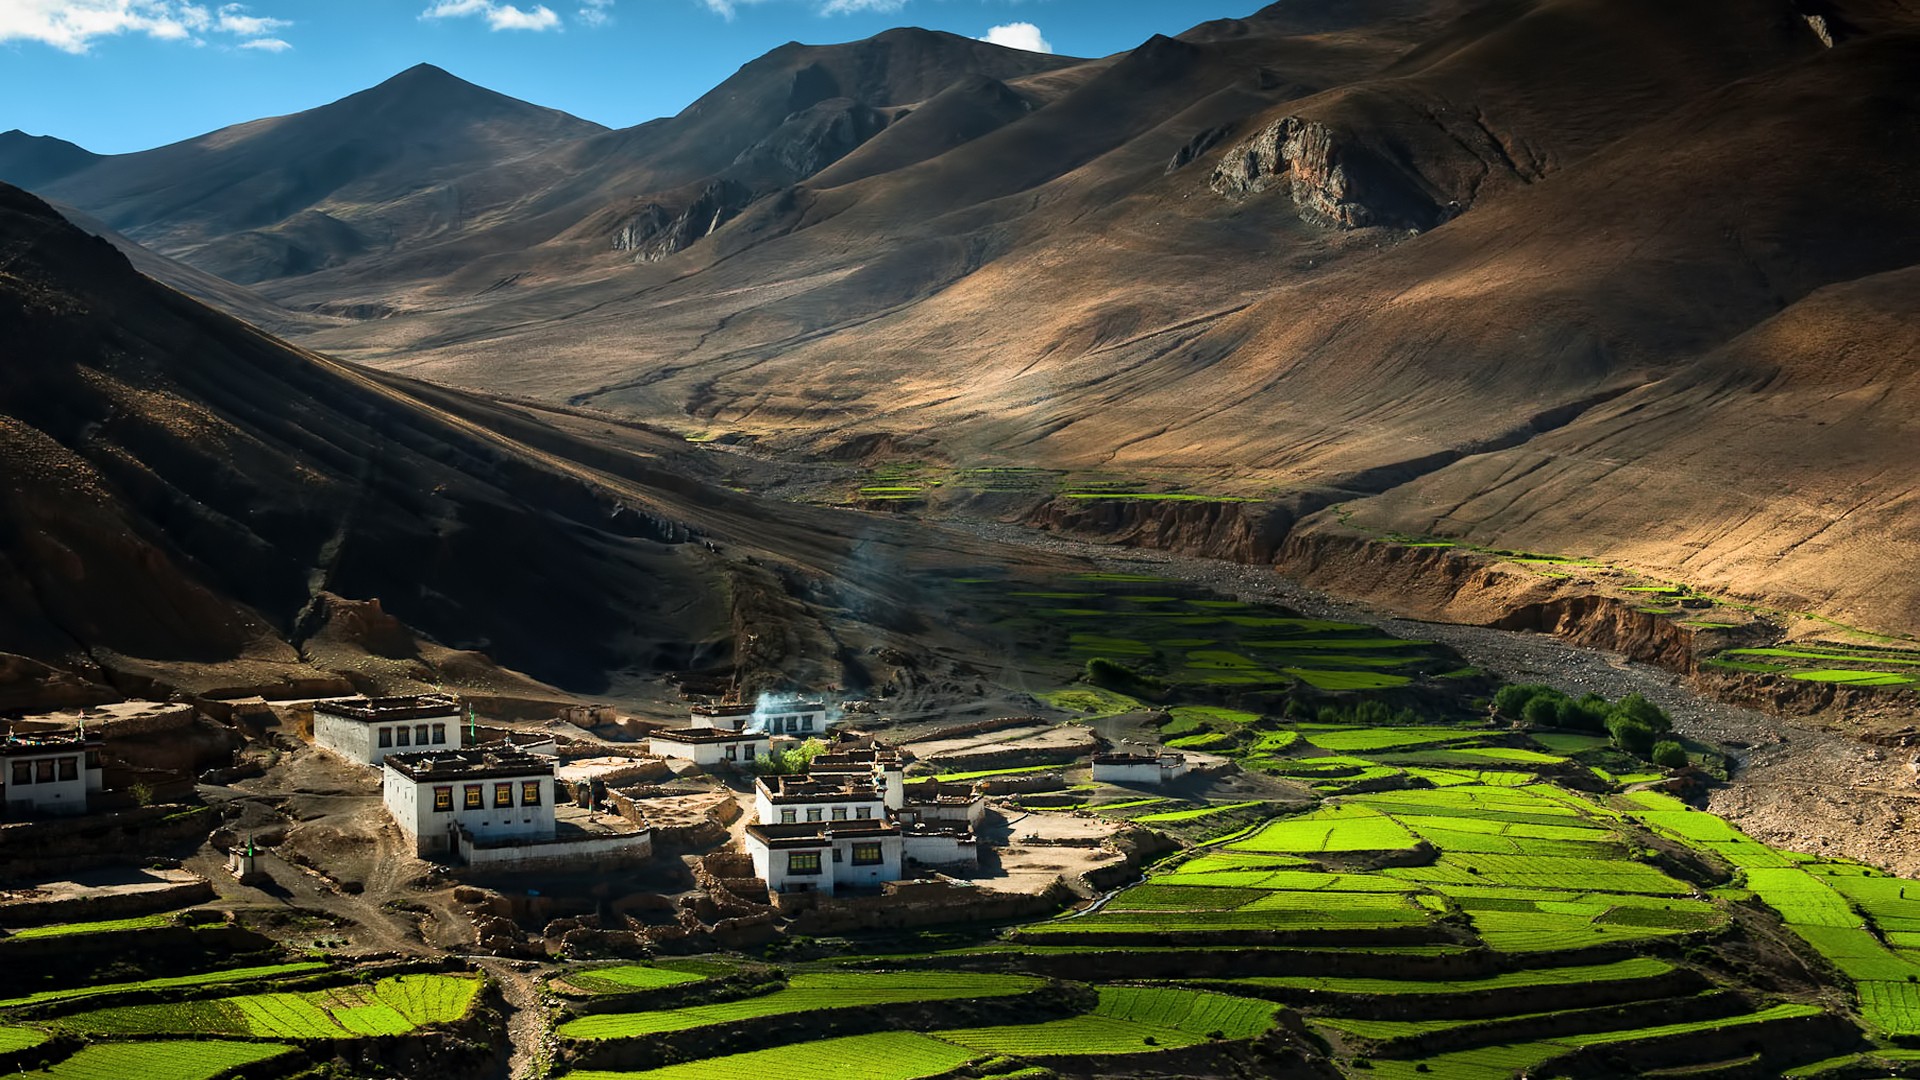 General 1920x1080 nature mountains landscape Tibet Asia village